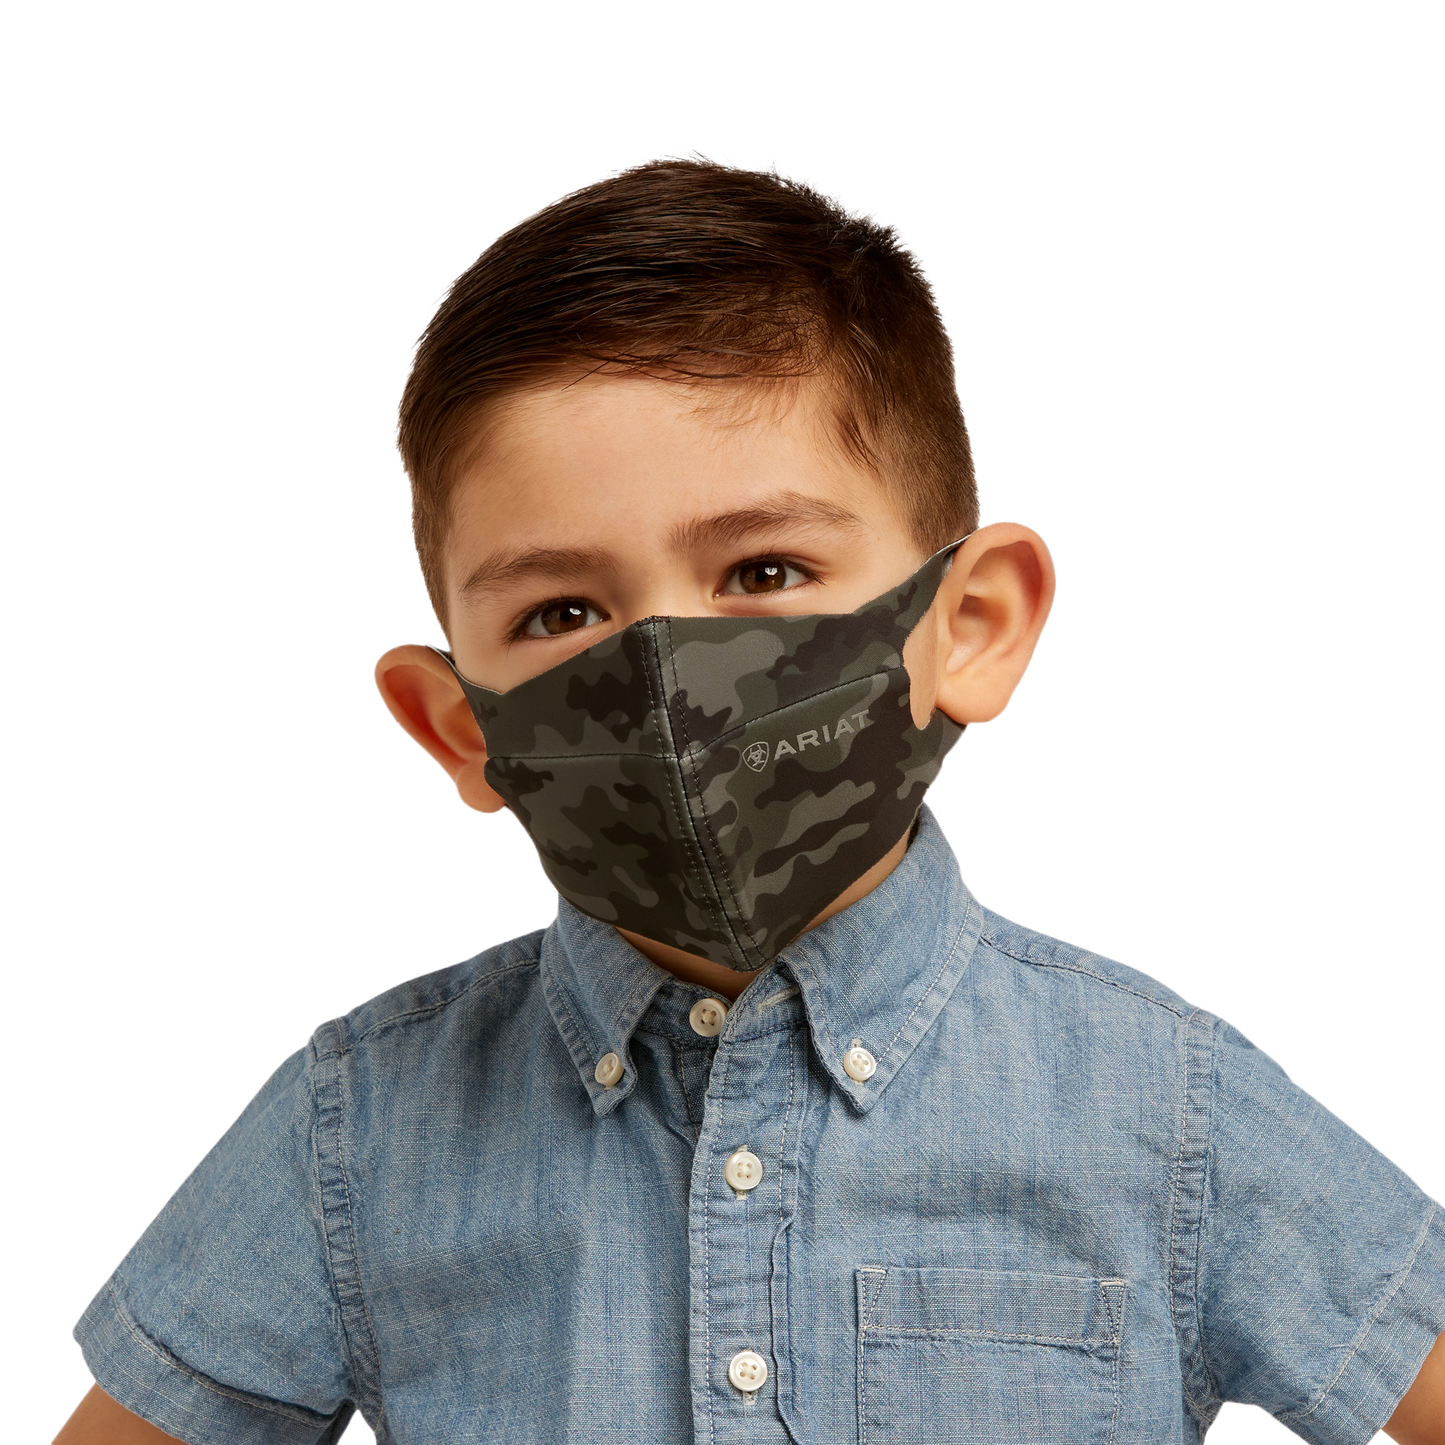 Ariat Unisex Youth AriatTEK Little Kid Camo 2-Pack Face Mask 10038899